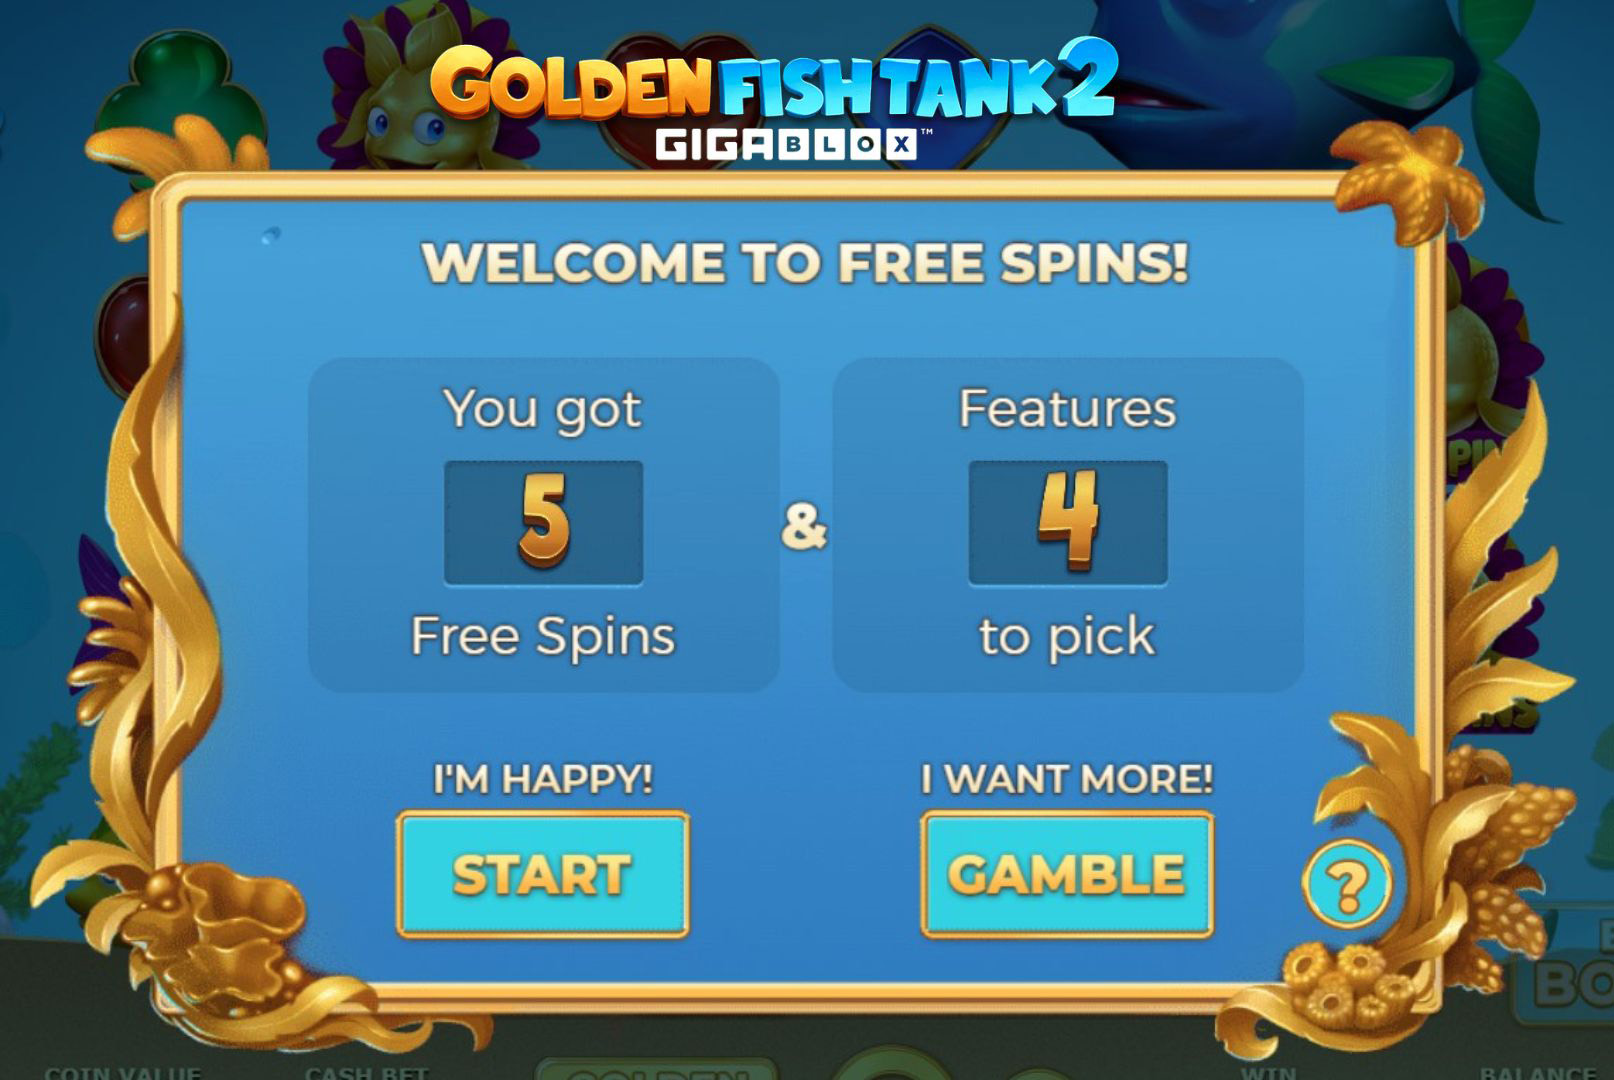 fitur freespin slot golden fish tank 2 gigablox